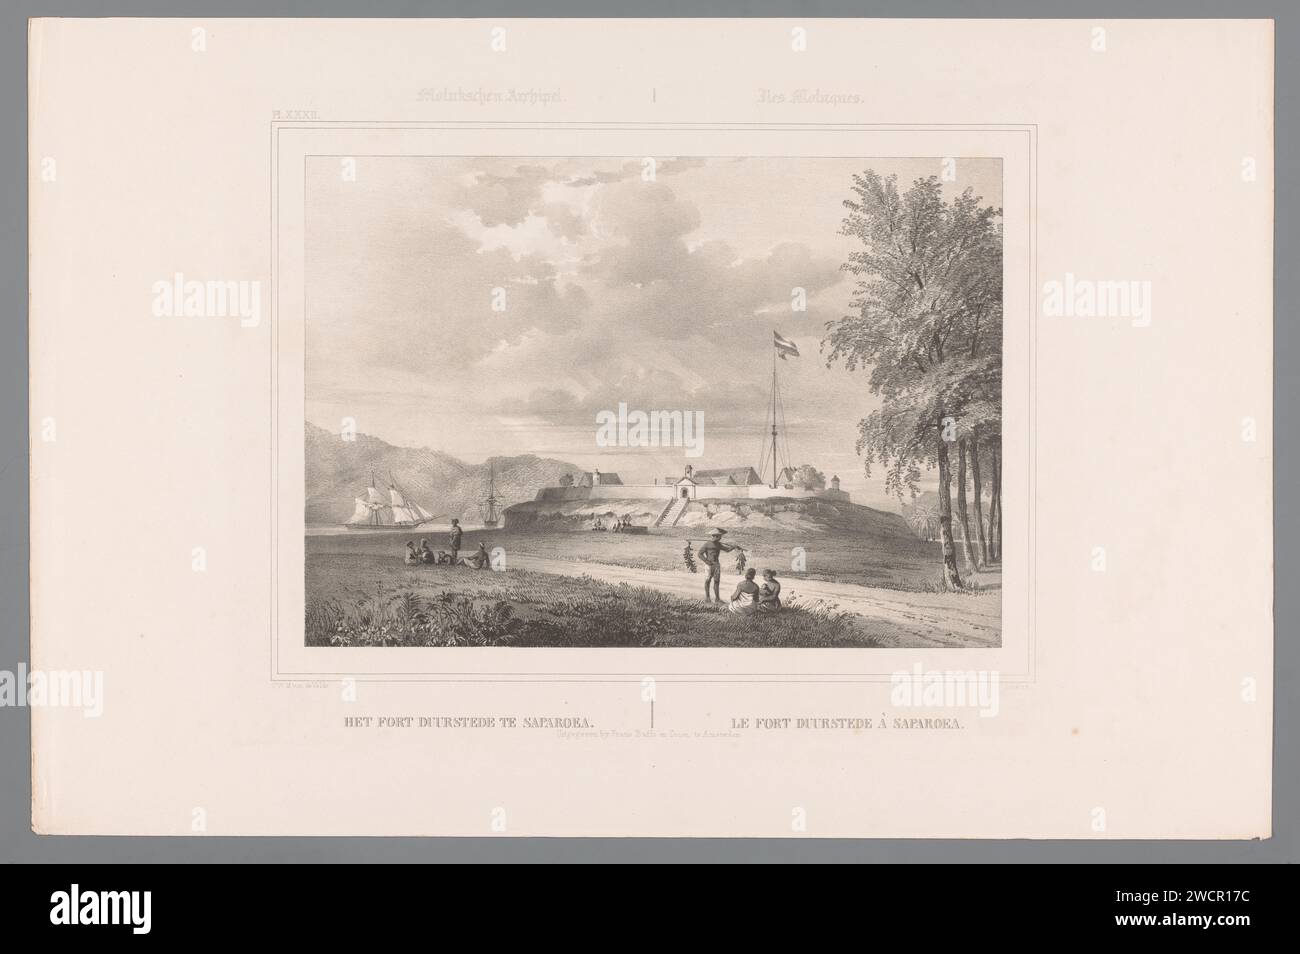 Blick auf Fort Duurstede in Saparua, Paulus Lauters, nach Charles William Meredith van de Velde, ca. 1847 Druck oben links: pl.xxxii. Amsterdamer Papierfestung. Fahnenmast Molukken. Saparua Stockfoto